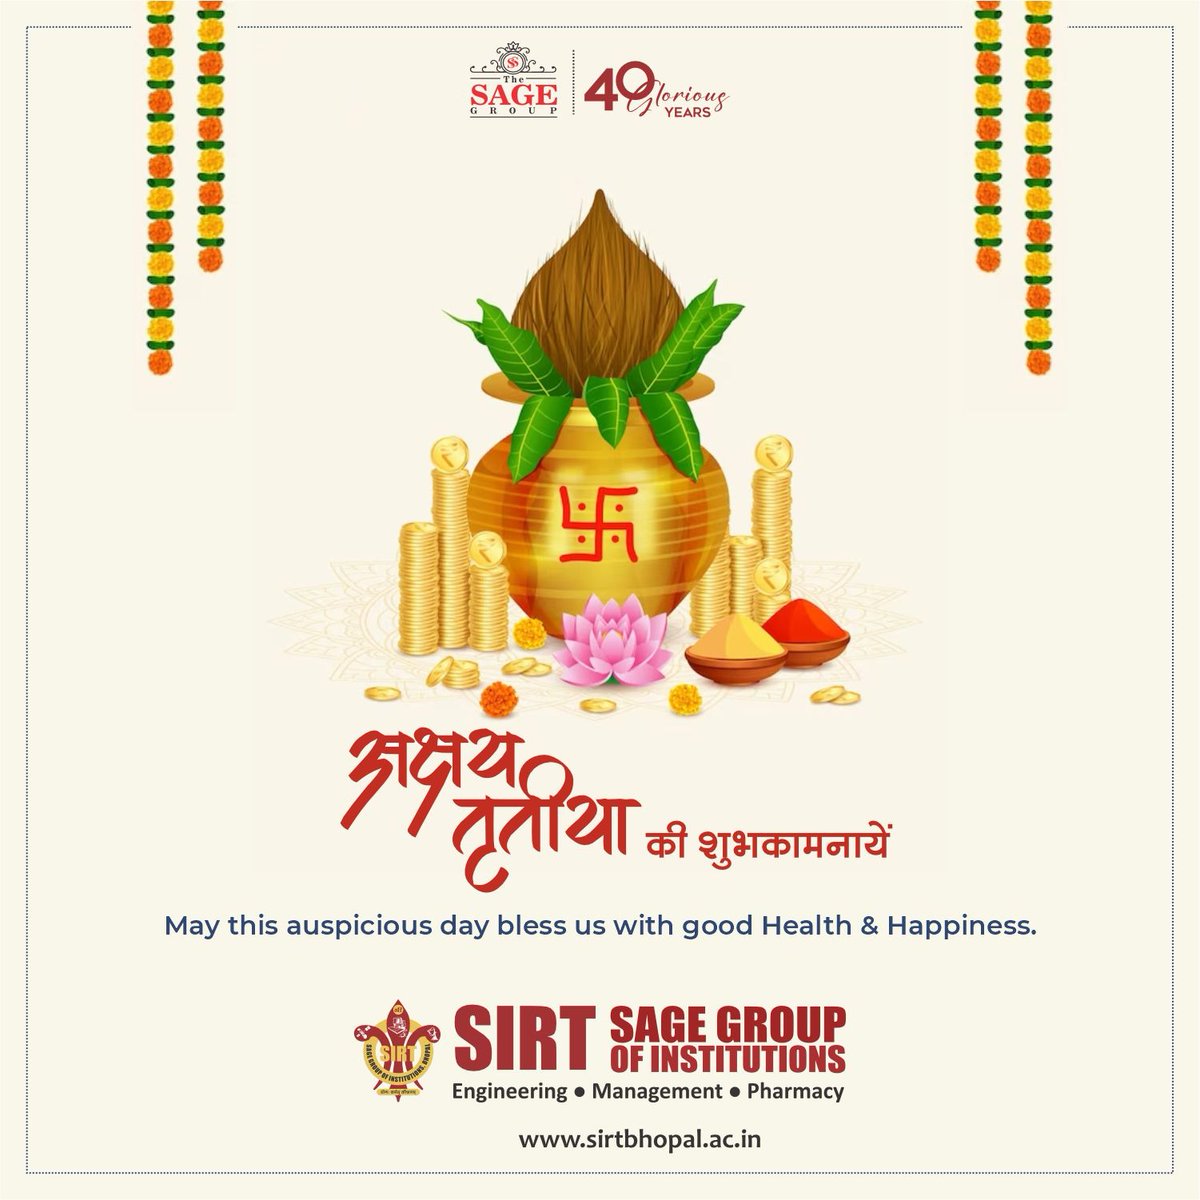 On this auspicious day of Akshaya Tritiya, may your Life be filled with Golden Opportunities and Prosperity 🌟💫

#festival
#akshaytritiya 
#chandanyatra
#god  
#buygold
#thesagegroup
#thesagebhopal